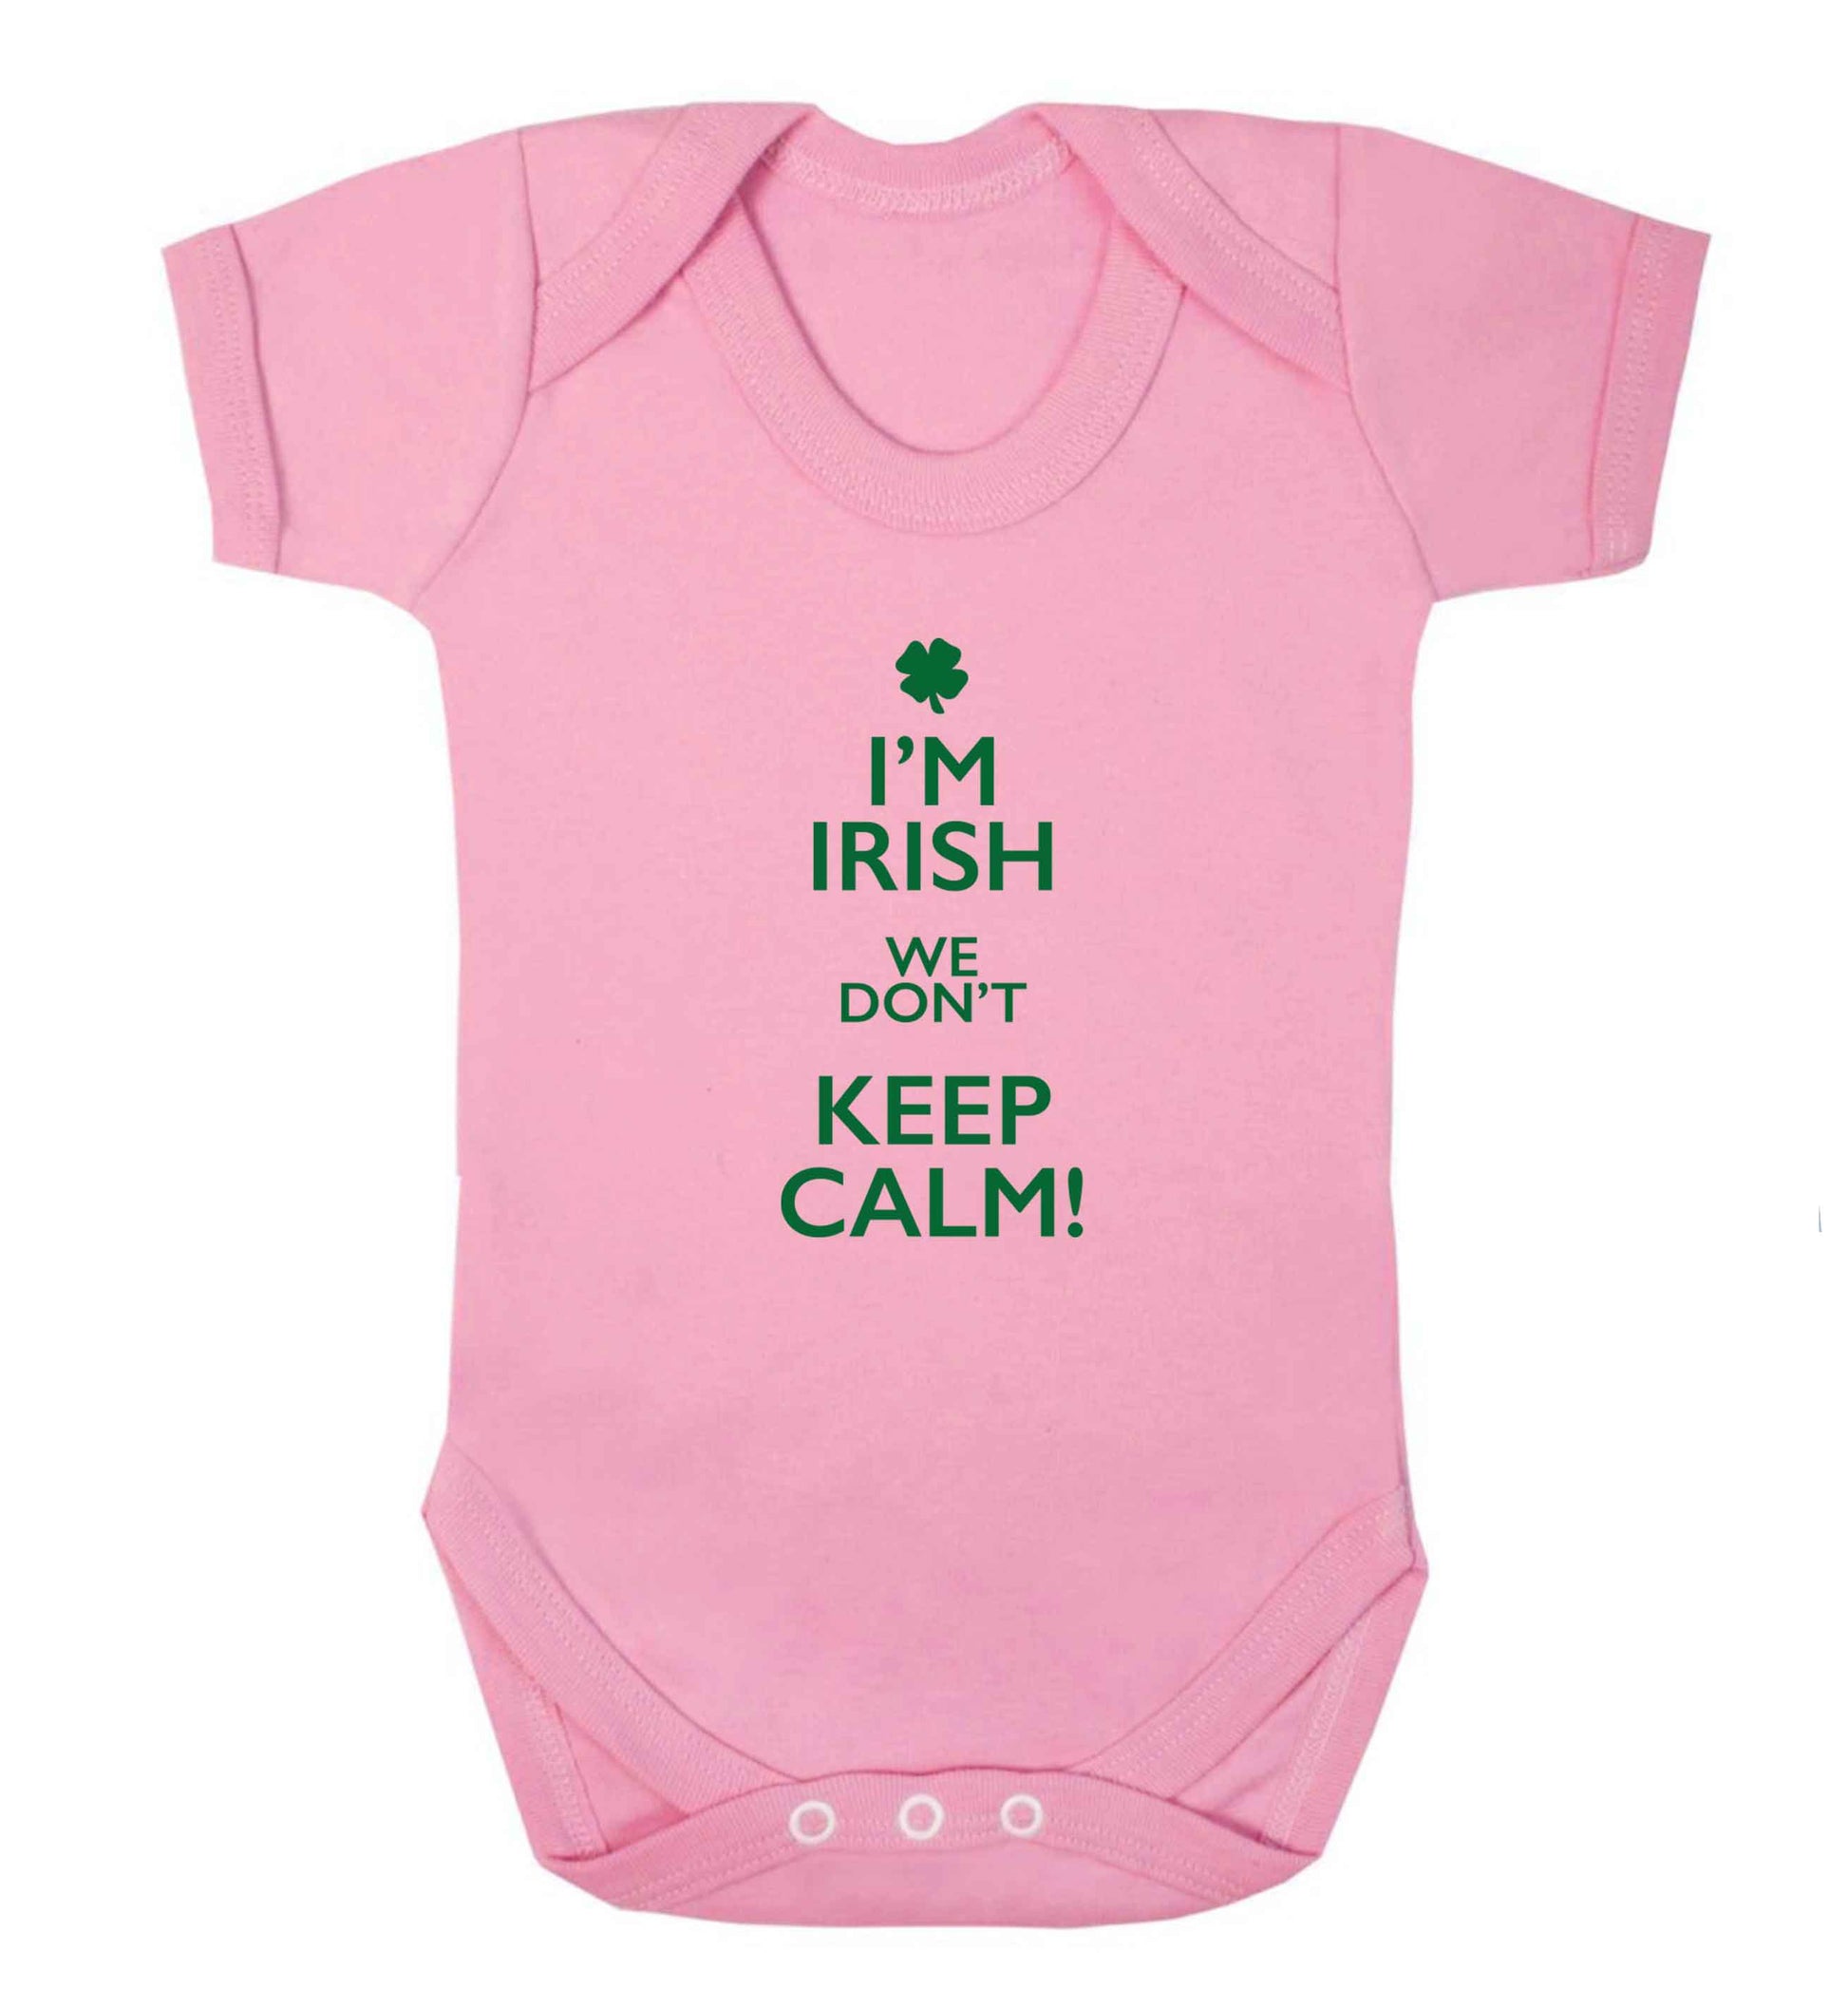 I'm Irish we don't keep calm baby vest pale pink 18-24 months